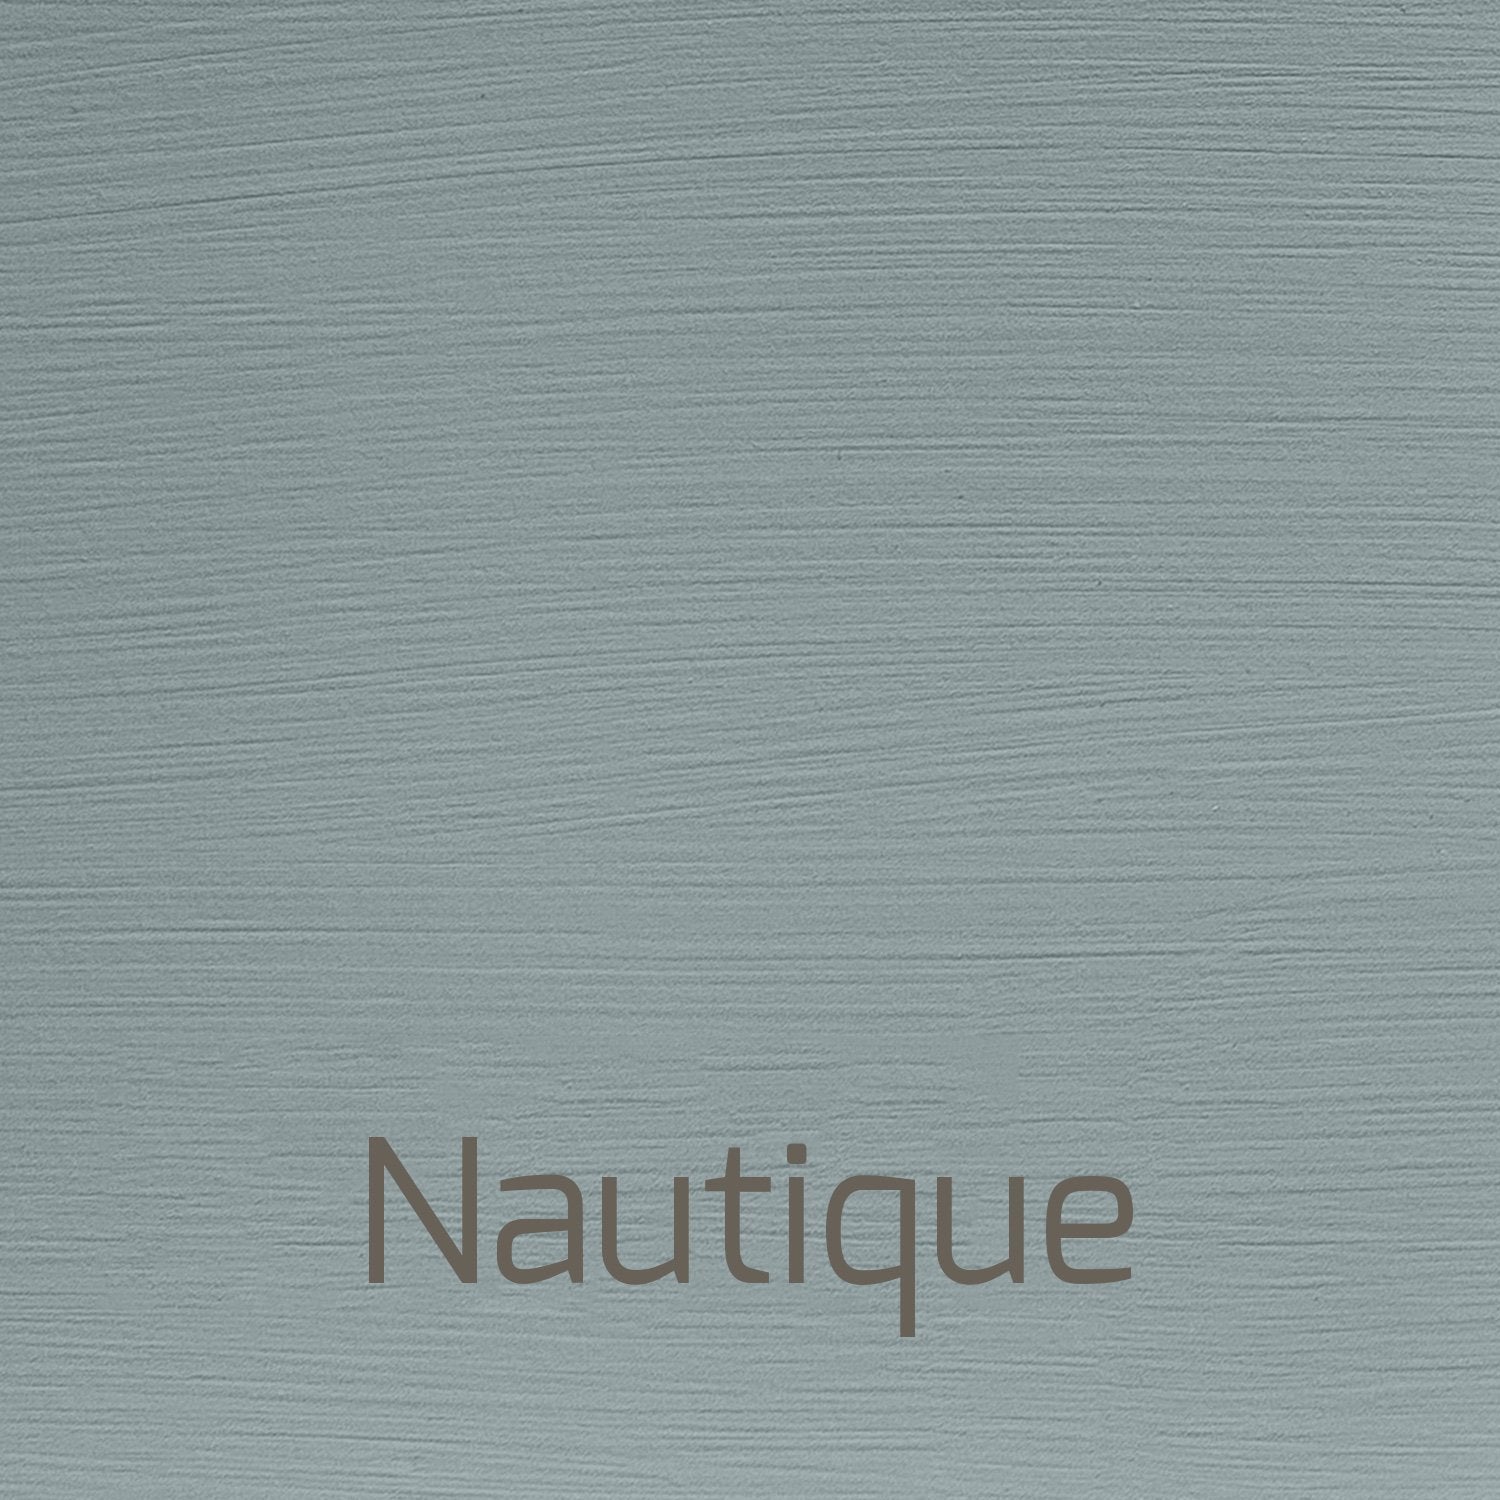 Nautique - Versante Eggshell-Versante Eggshell-Autentico Paint Online